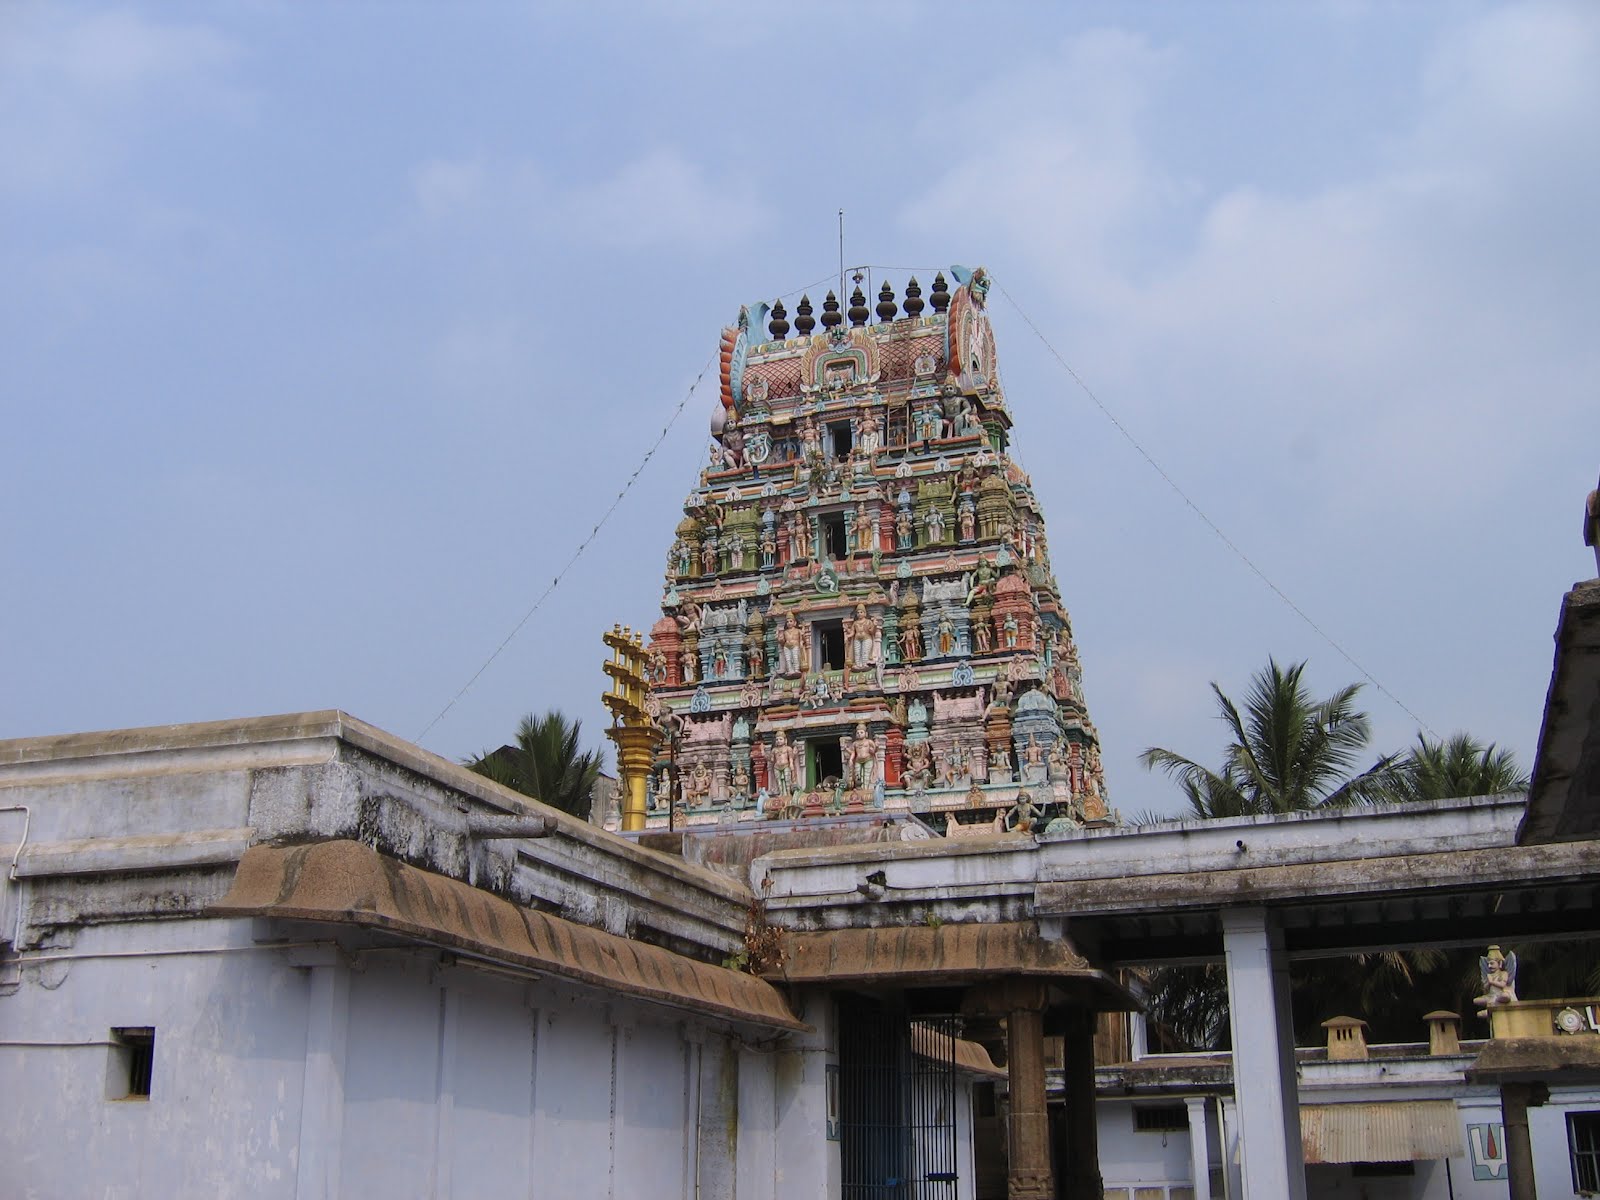 http://anudinam.org/wp-content/uploads/2012/03/Thirumazhisai-temple-tower.jpg